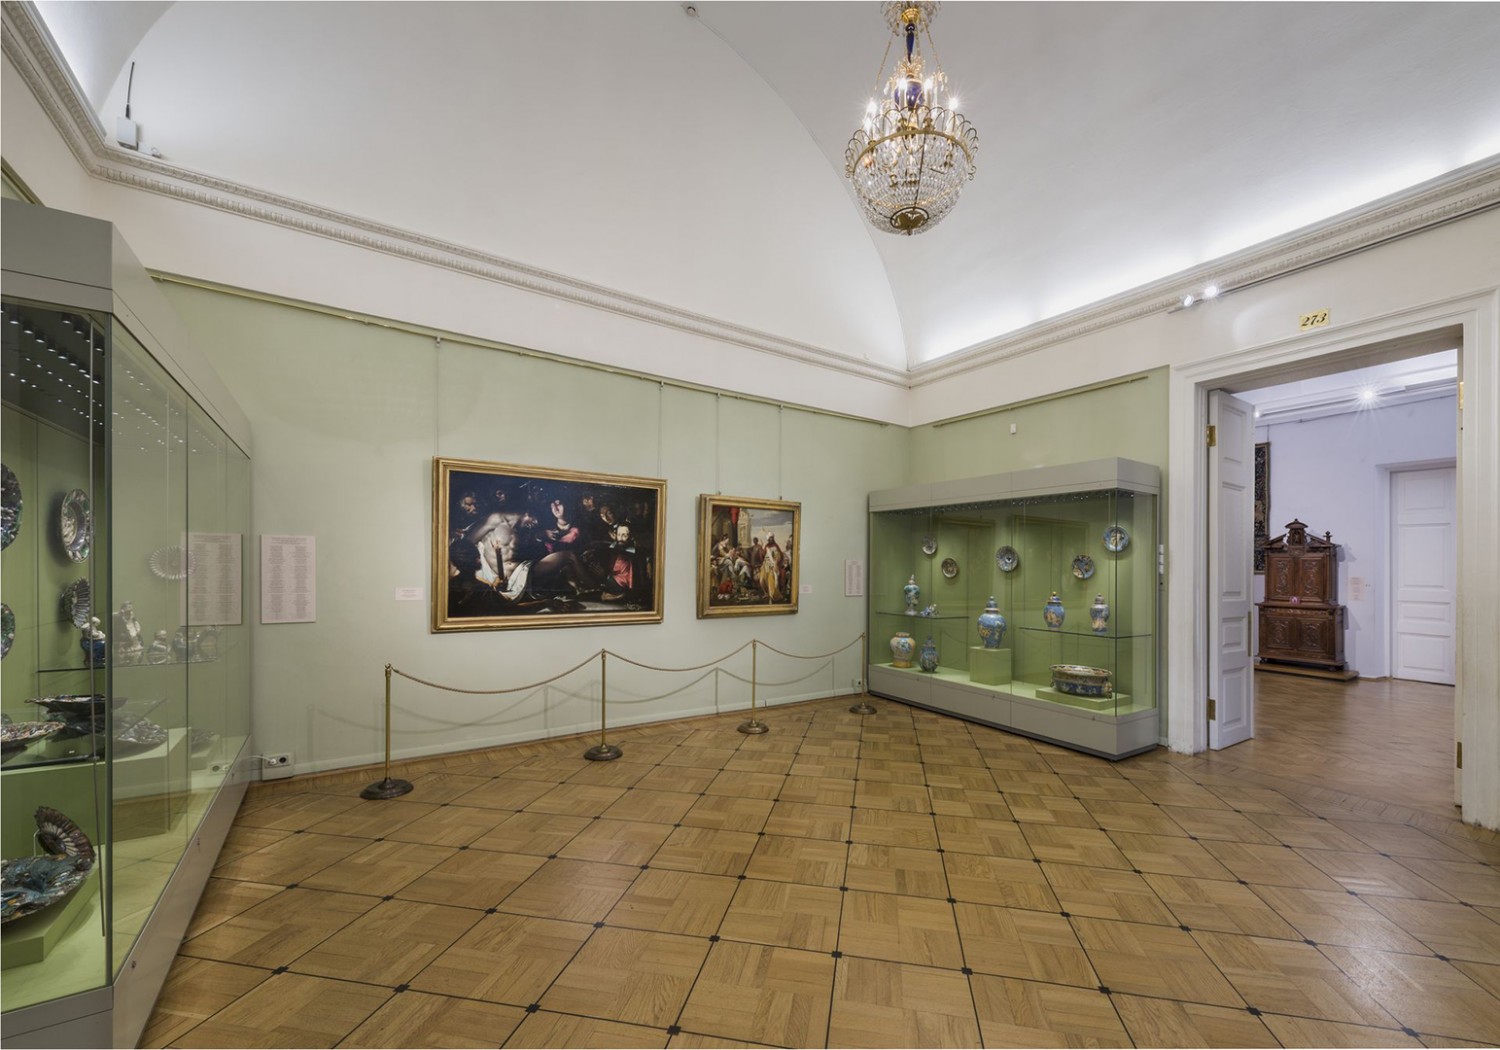 Зал искусства Франции XVI в., источник фото: http://www.hermitagemuseum.org/wps/portal/hermitage/explore/buildings/locations/room/B10_F2_H273/?lng=ru